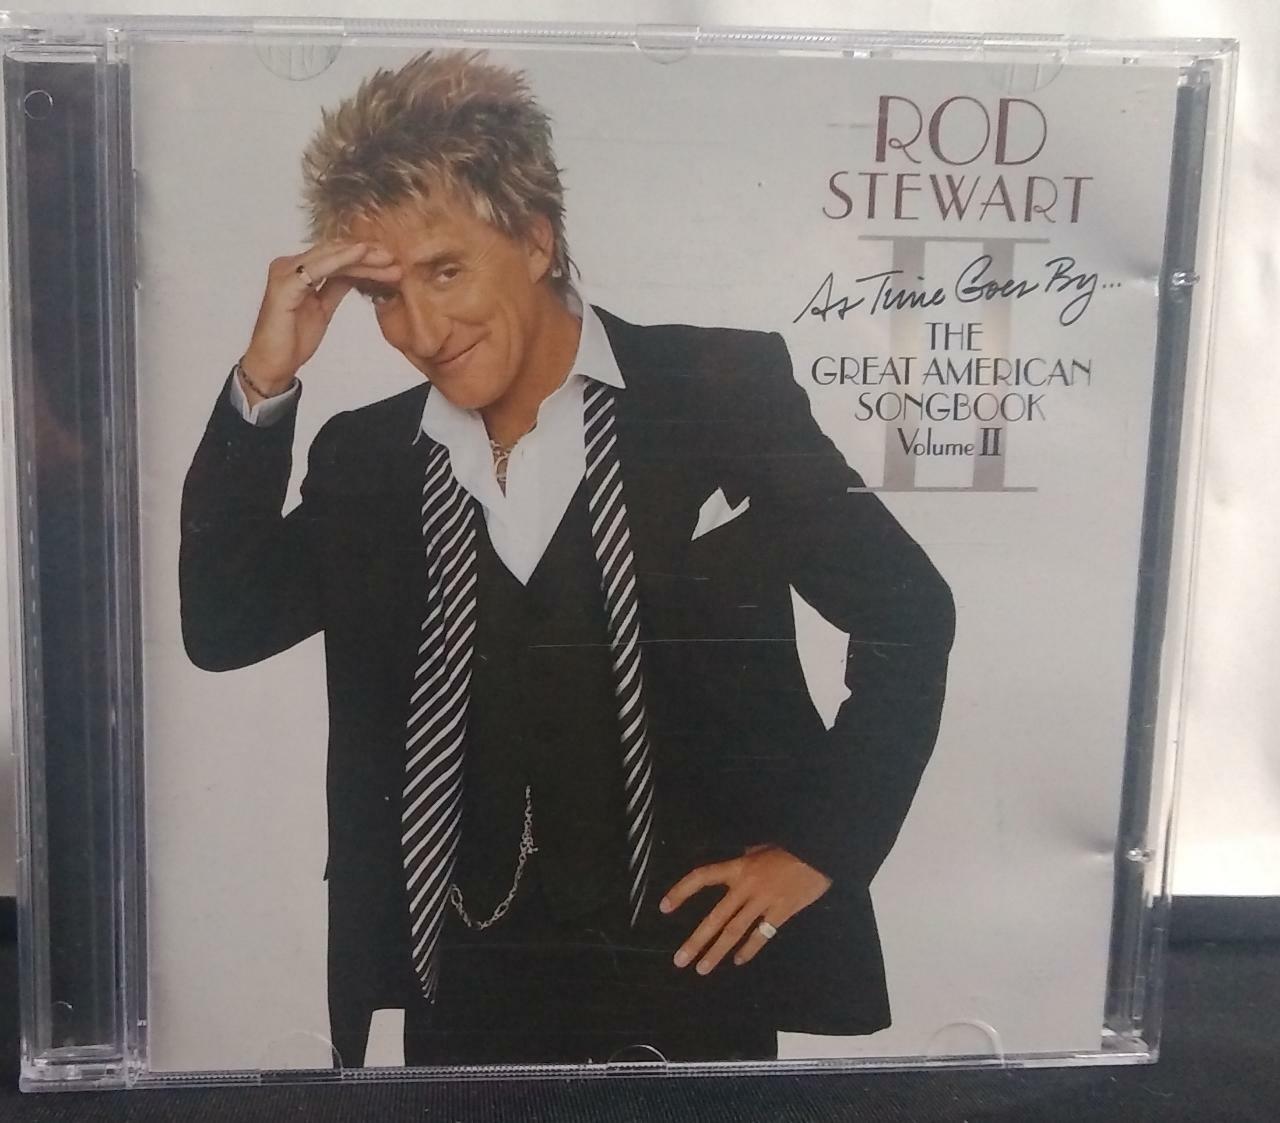 CD - Rod Stewart - As Time Goes By... The American Songbook Volume II